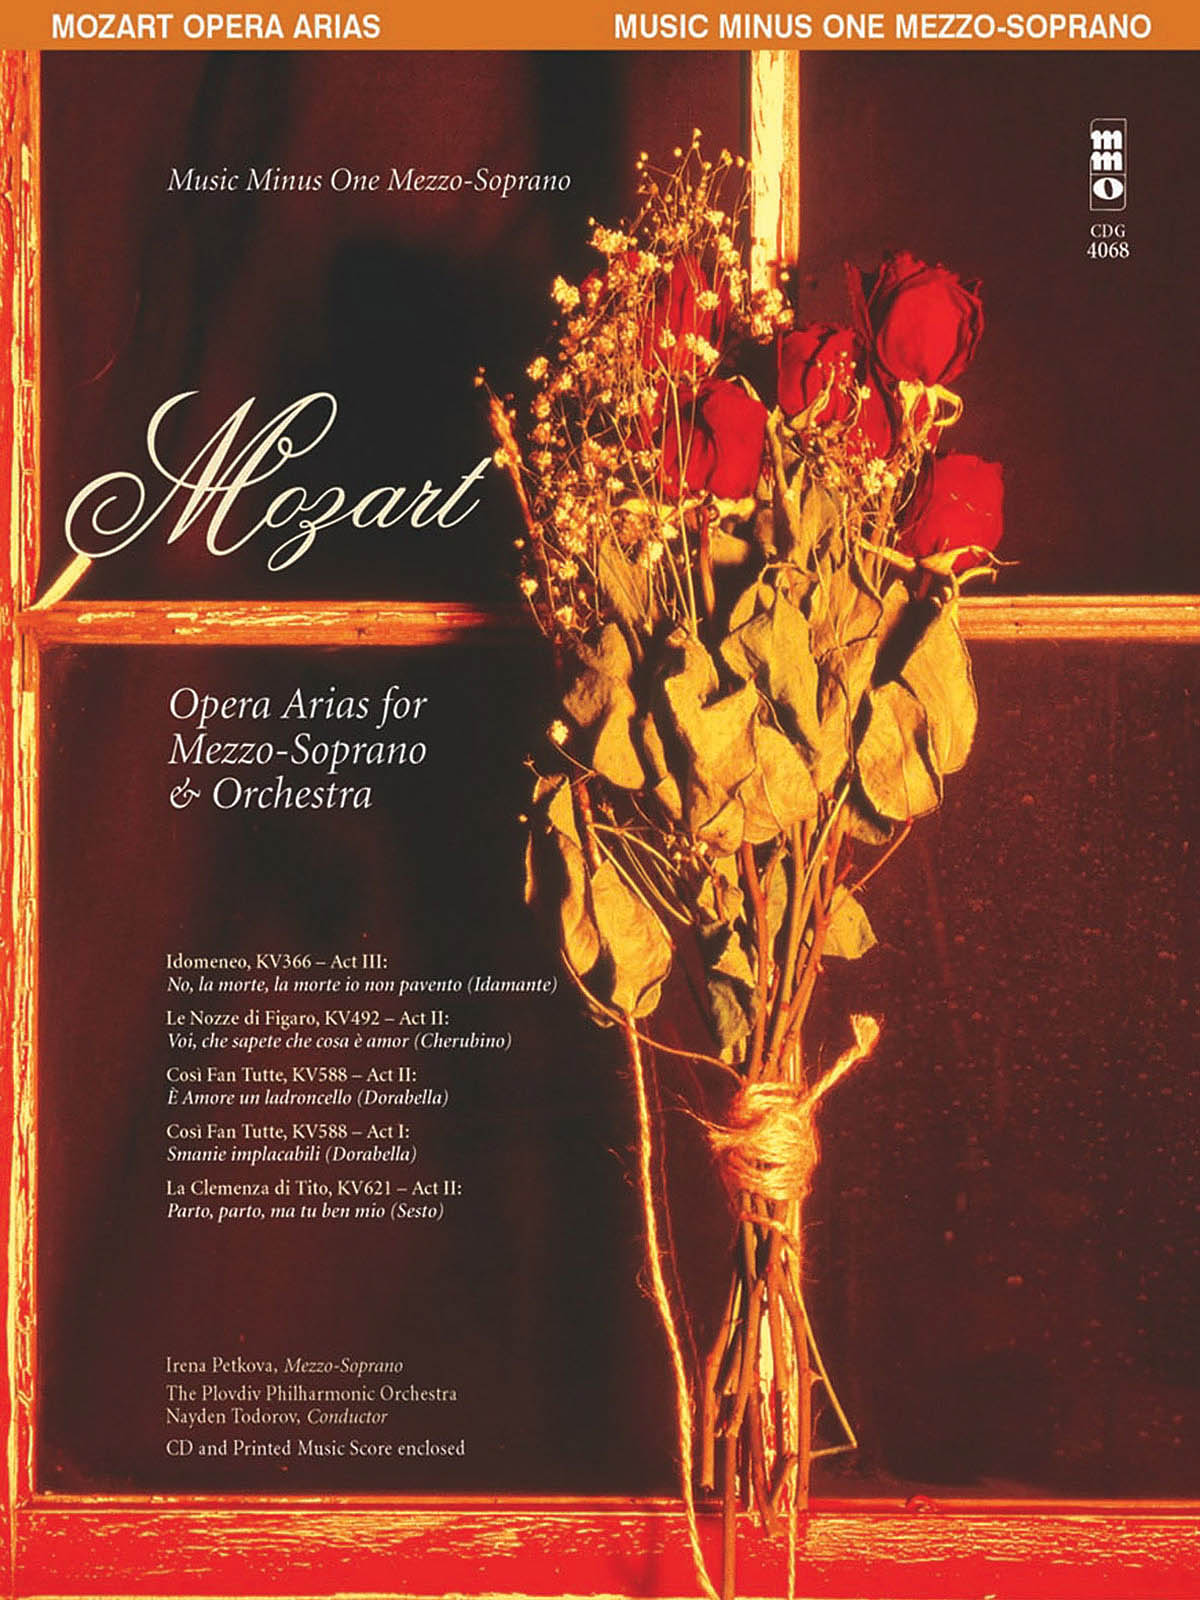 Wolfgang Amadeus Mozart: Mozart Opera Arias for Mezzo-Soprano and Orchestra: